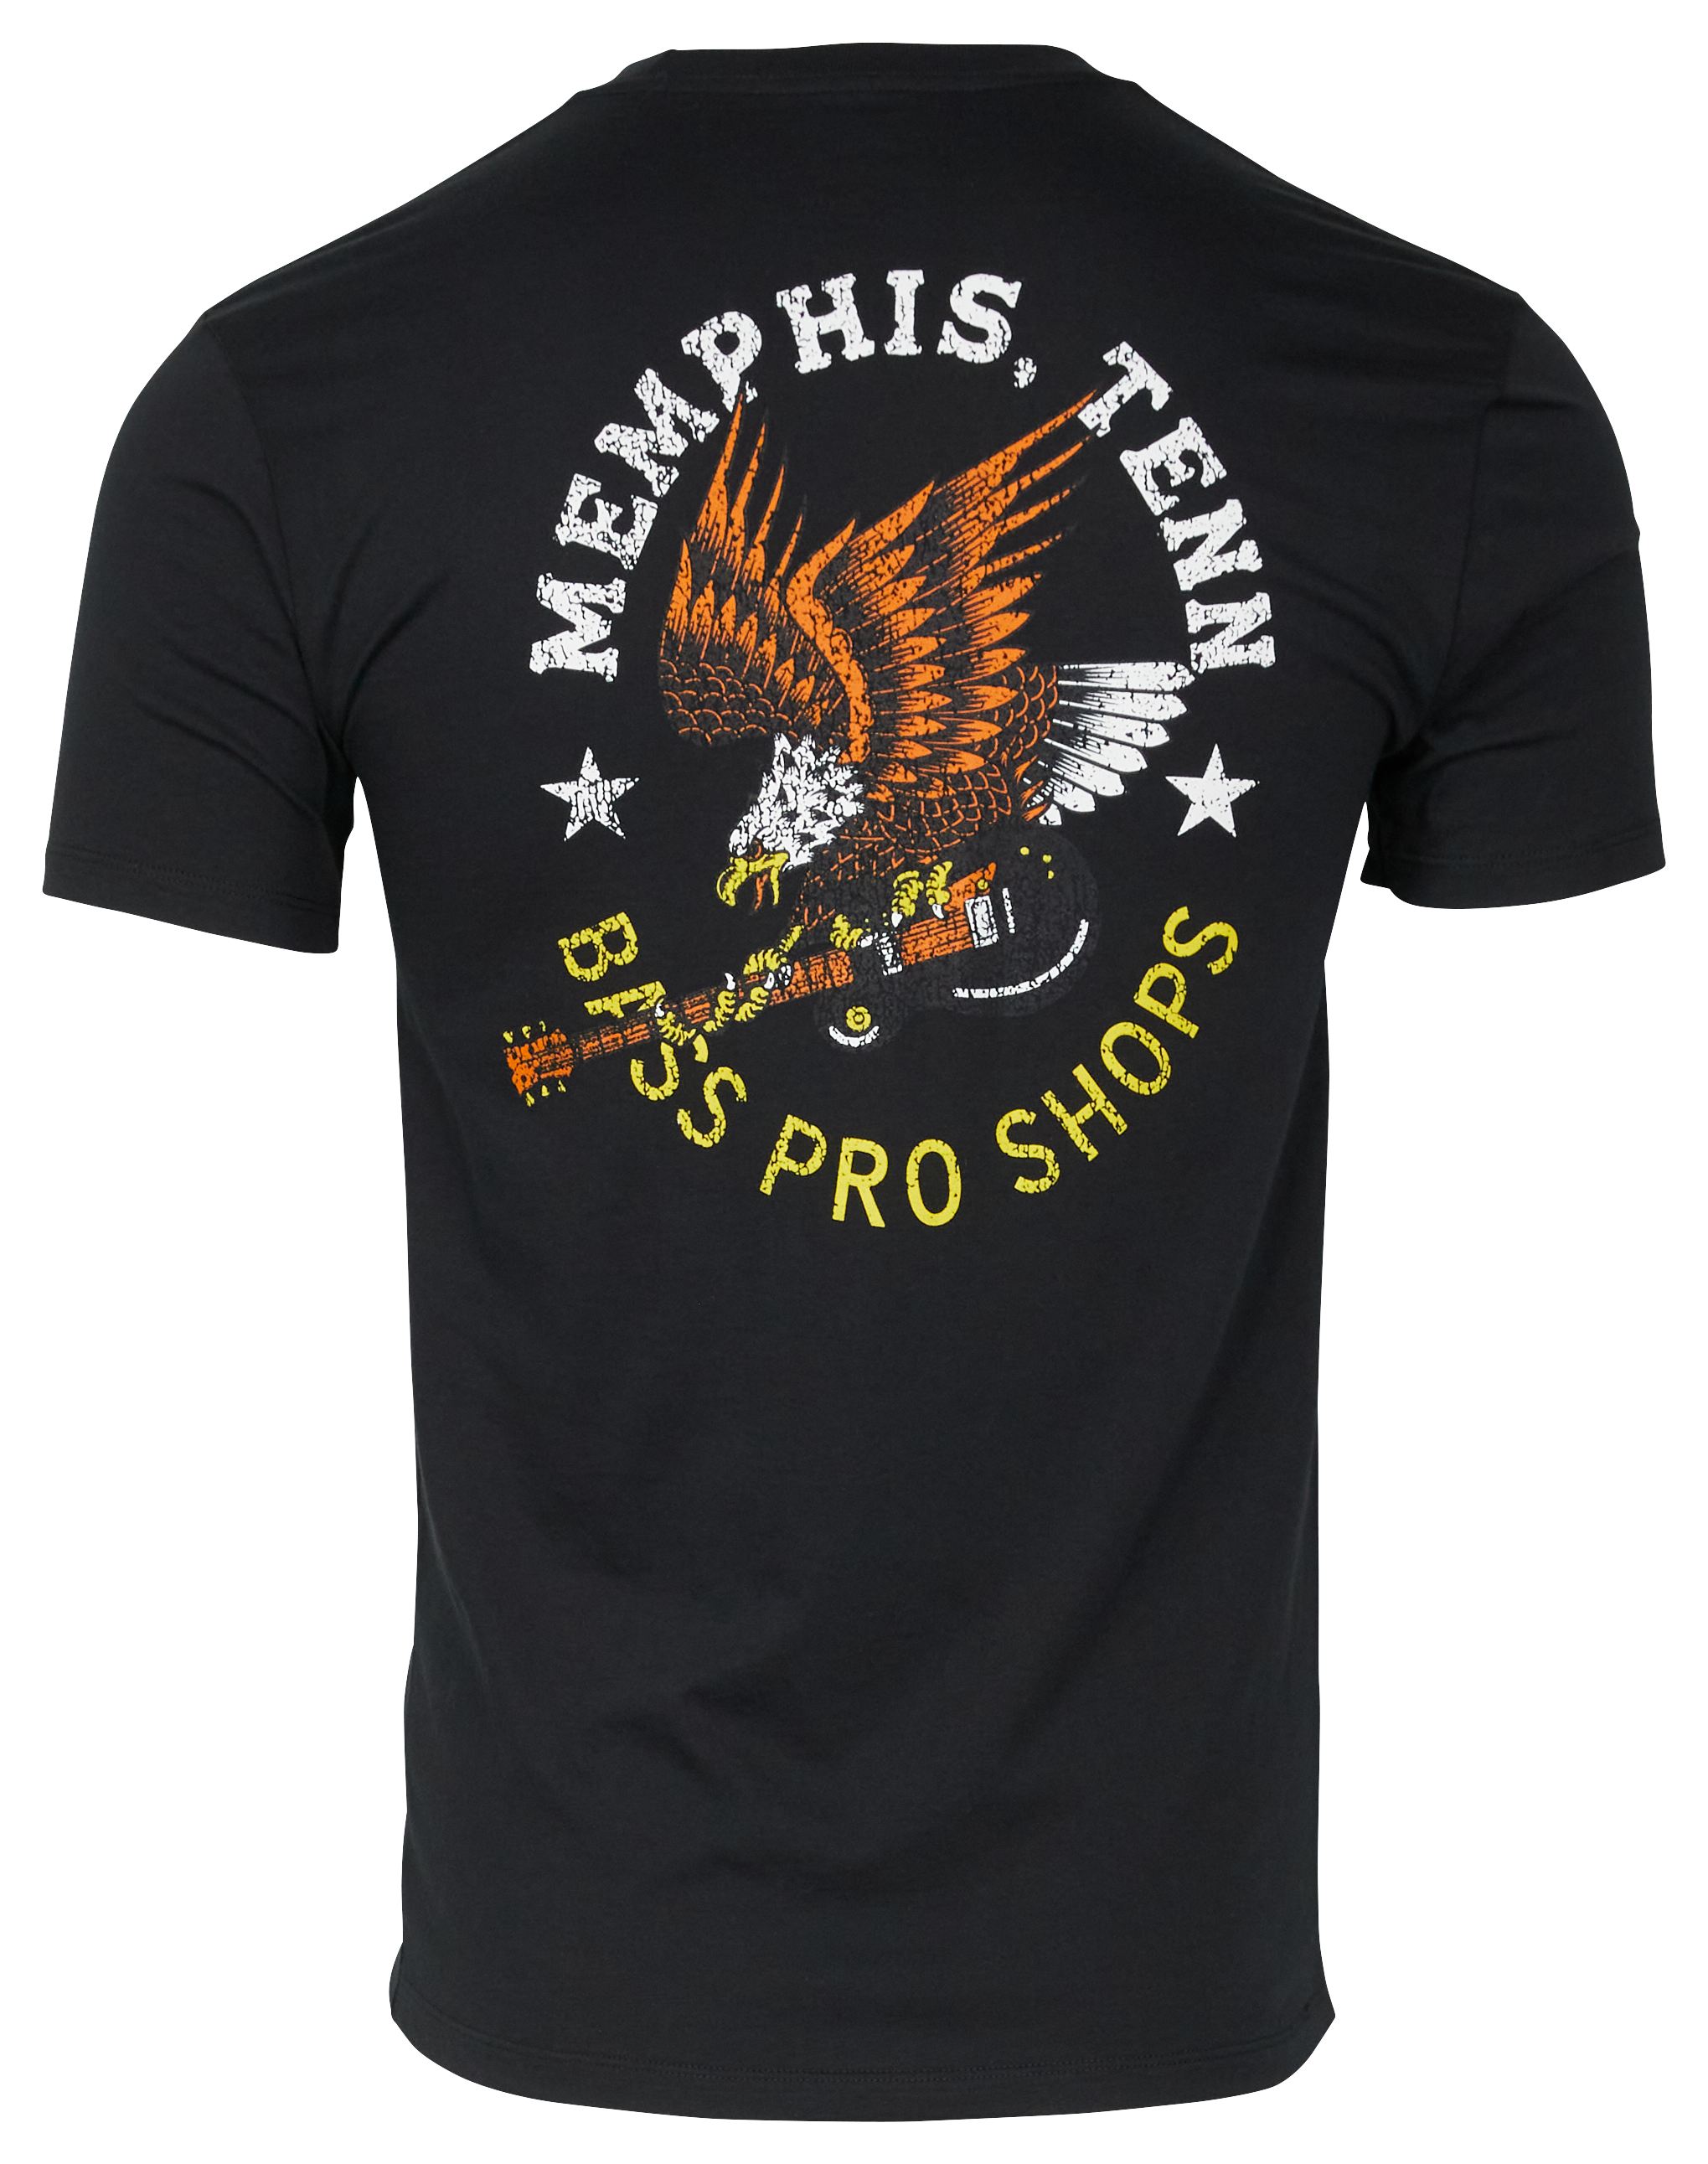 Bass Pro Shops Memphis Eagle Short-Sleeve T-Shirt for Men - Black - L